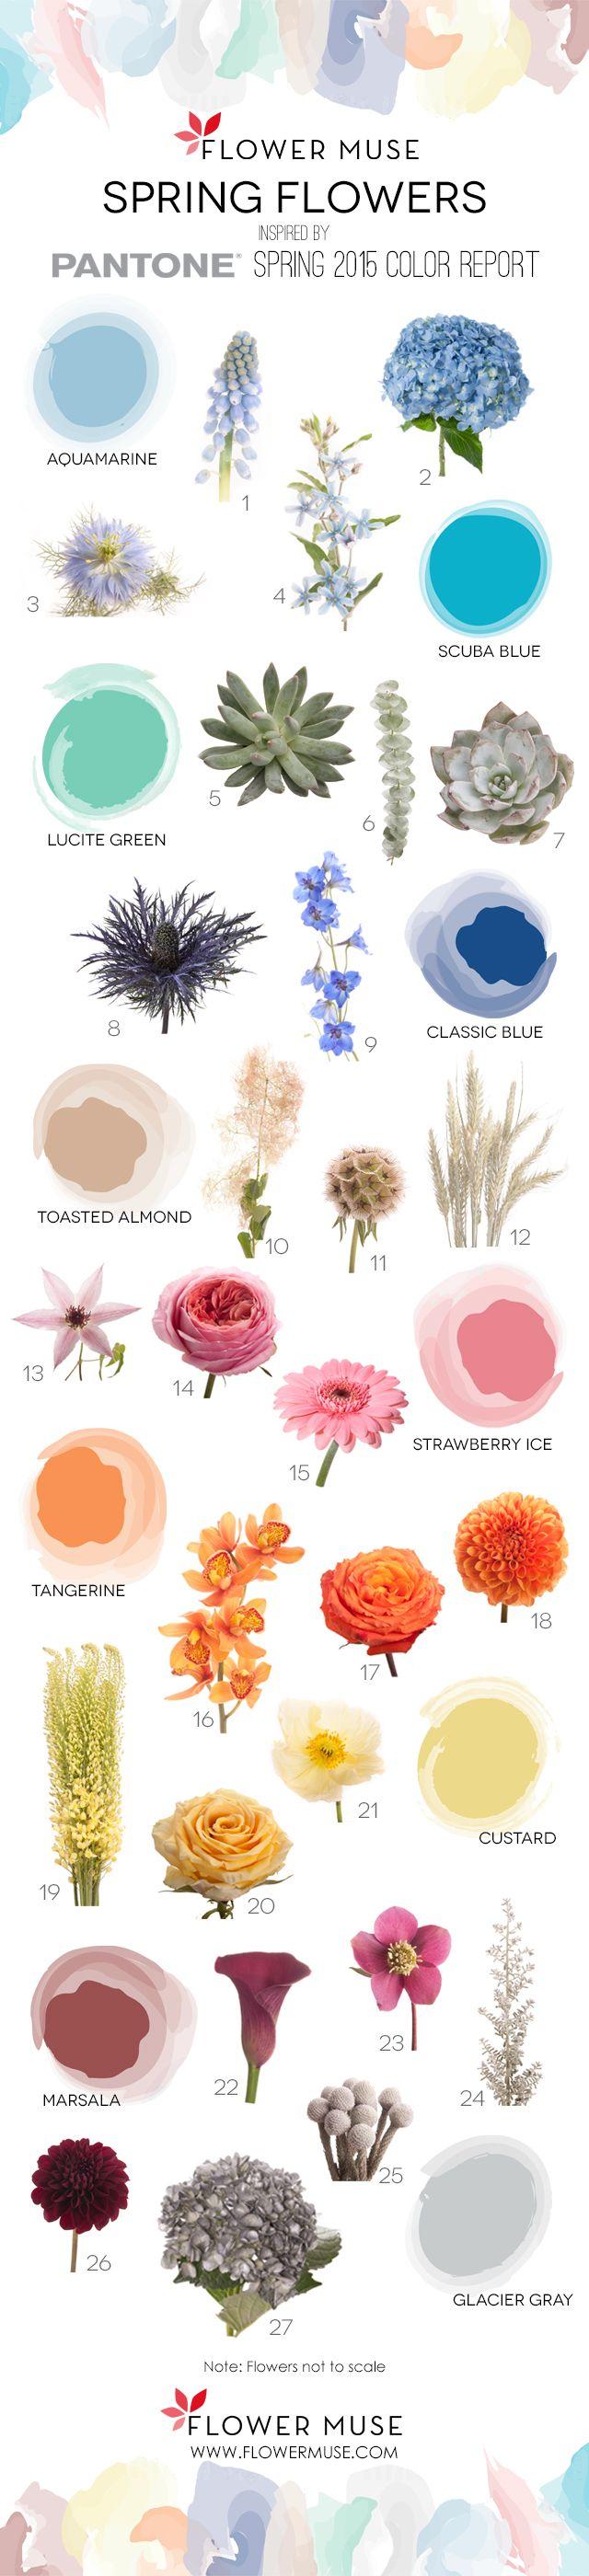 Mariage - 2015 Spring Flowers – Pantone Inspiration - Flower Muse Blog